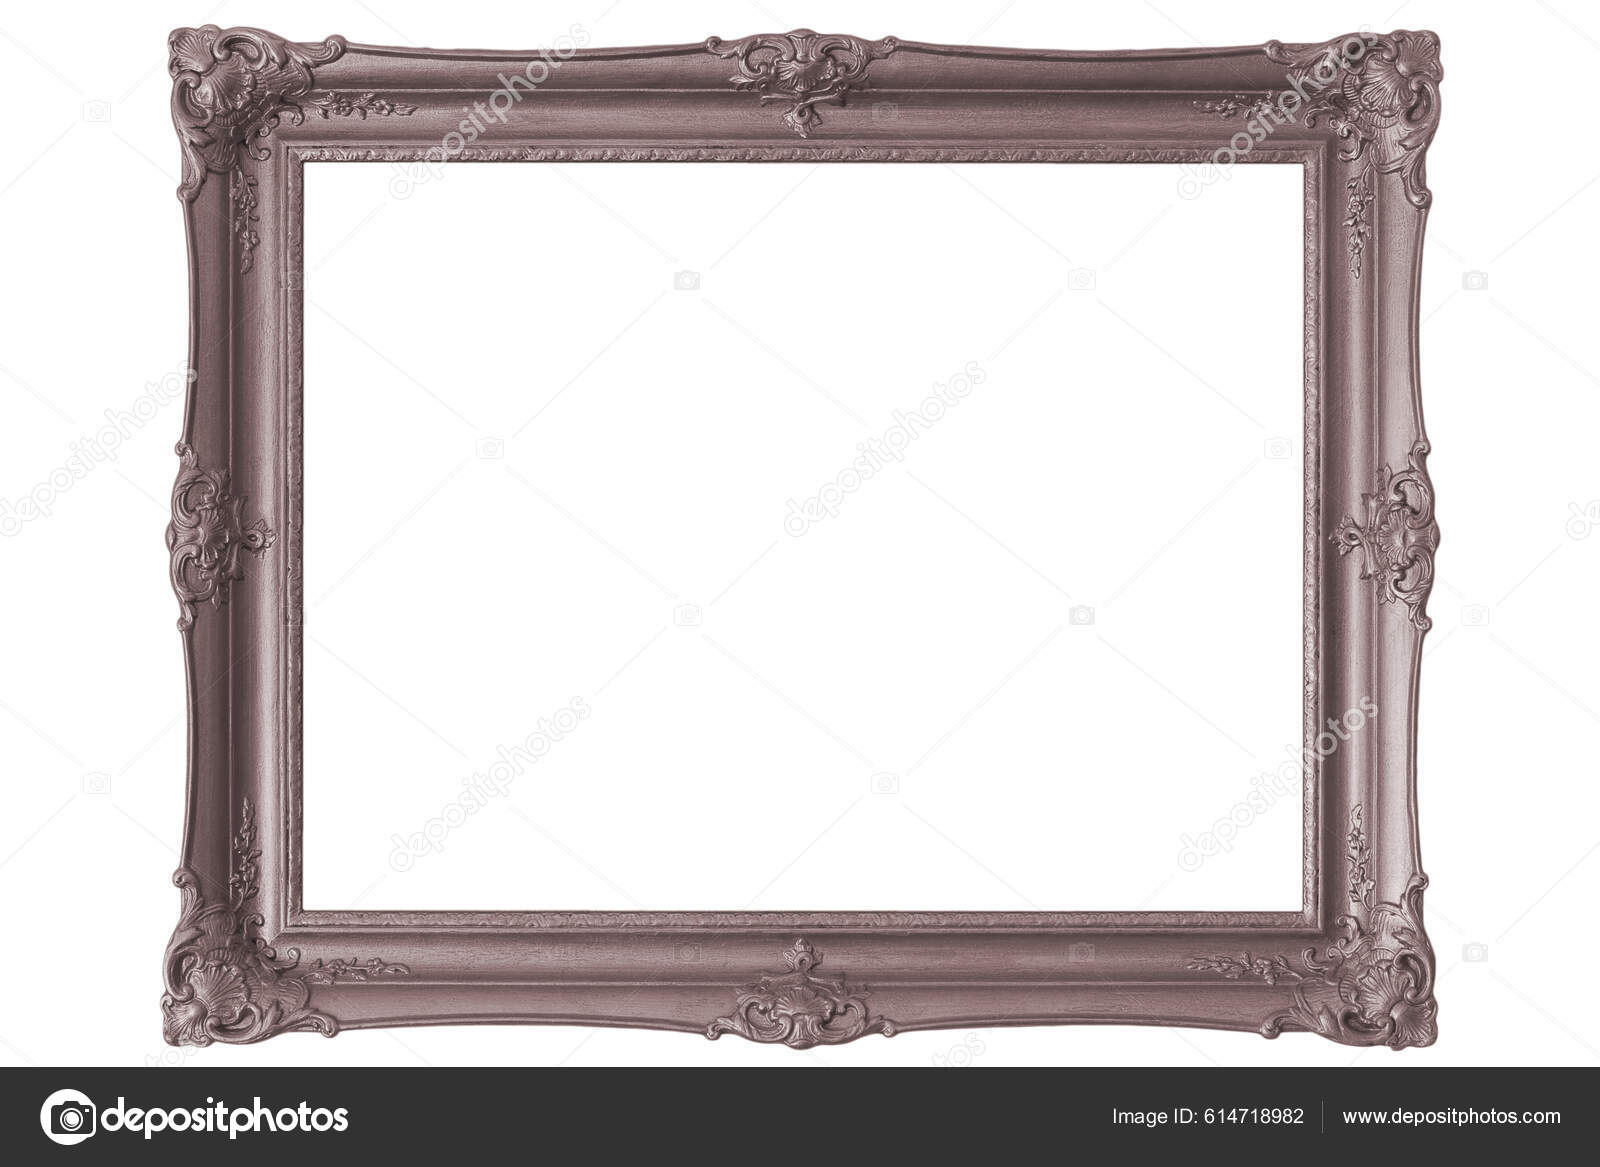 https://st.depositphotos.com/1006755/61471/i/1600/depositphotos_614718982-stock-photo-picture-frame-isolated-white-background.jpg